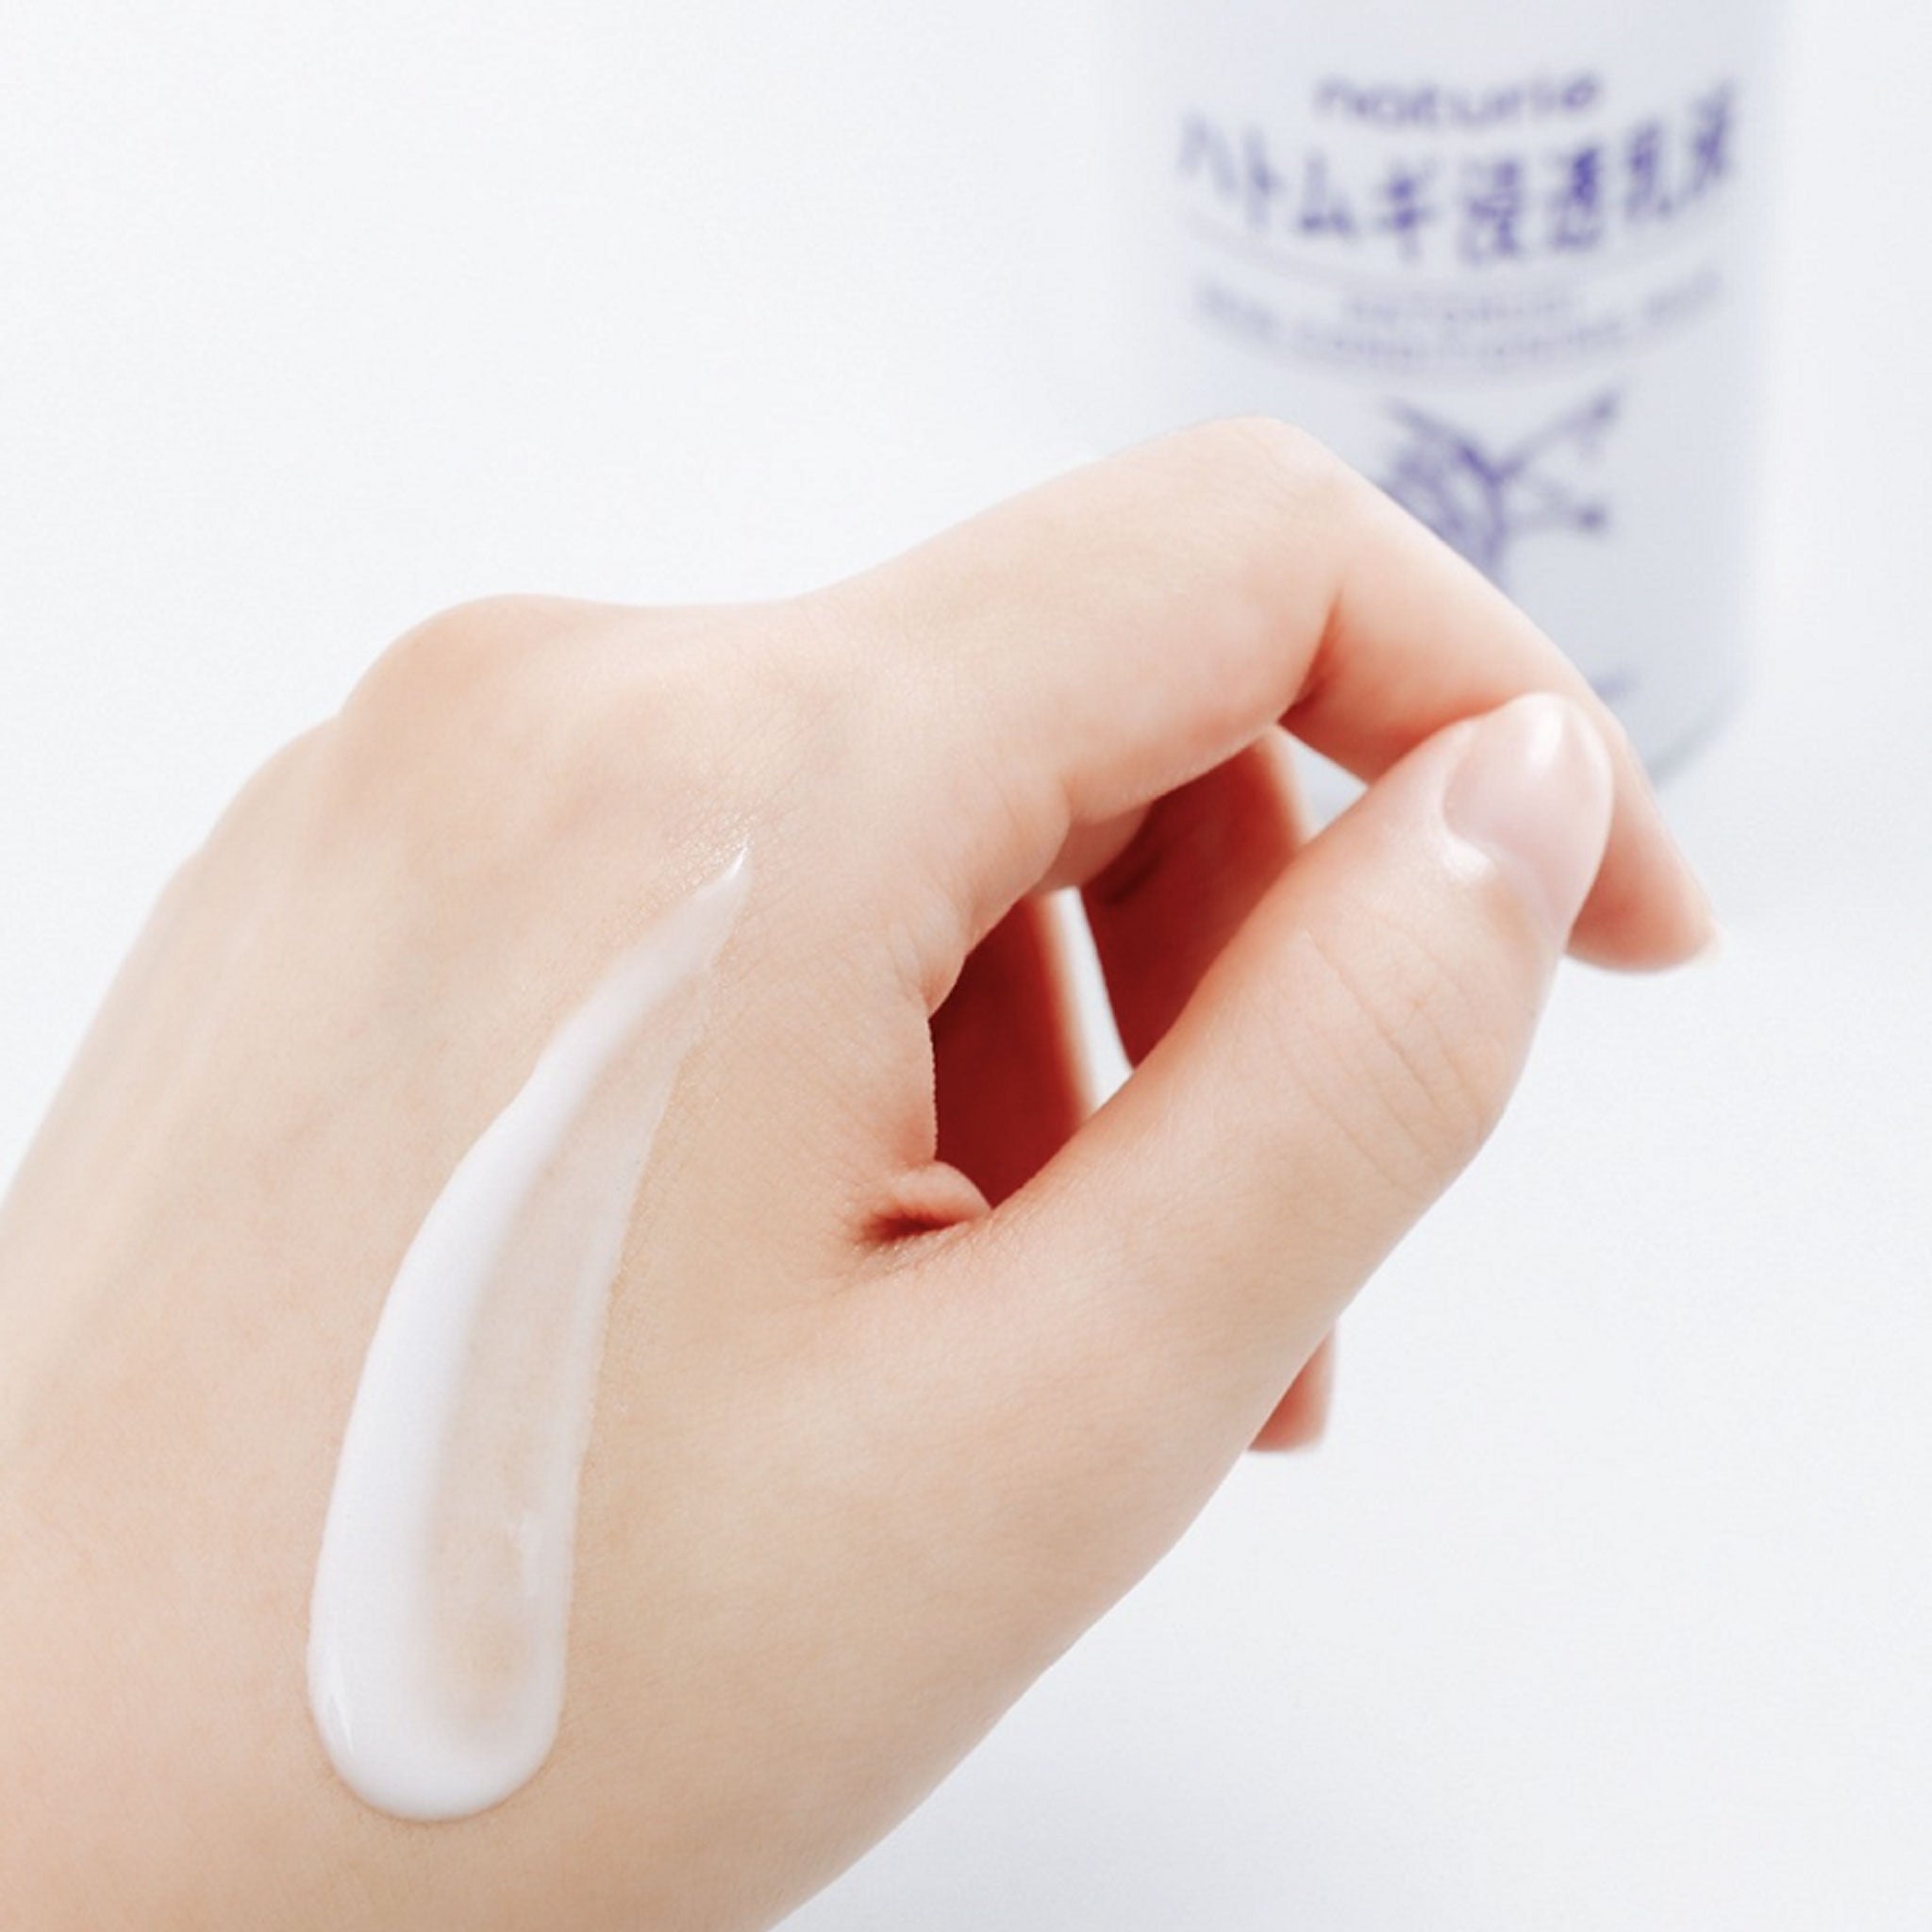 Naturie Hatomugi Skin Conditioning Milk 230ml